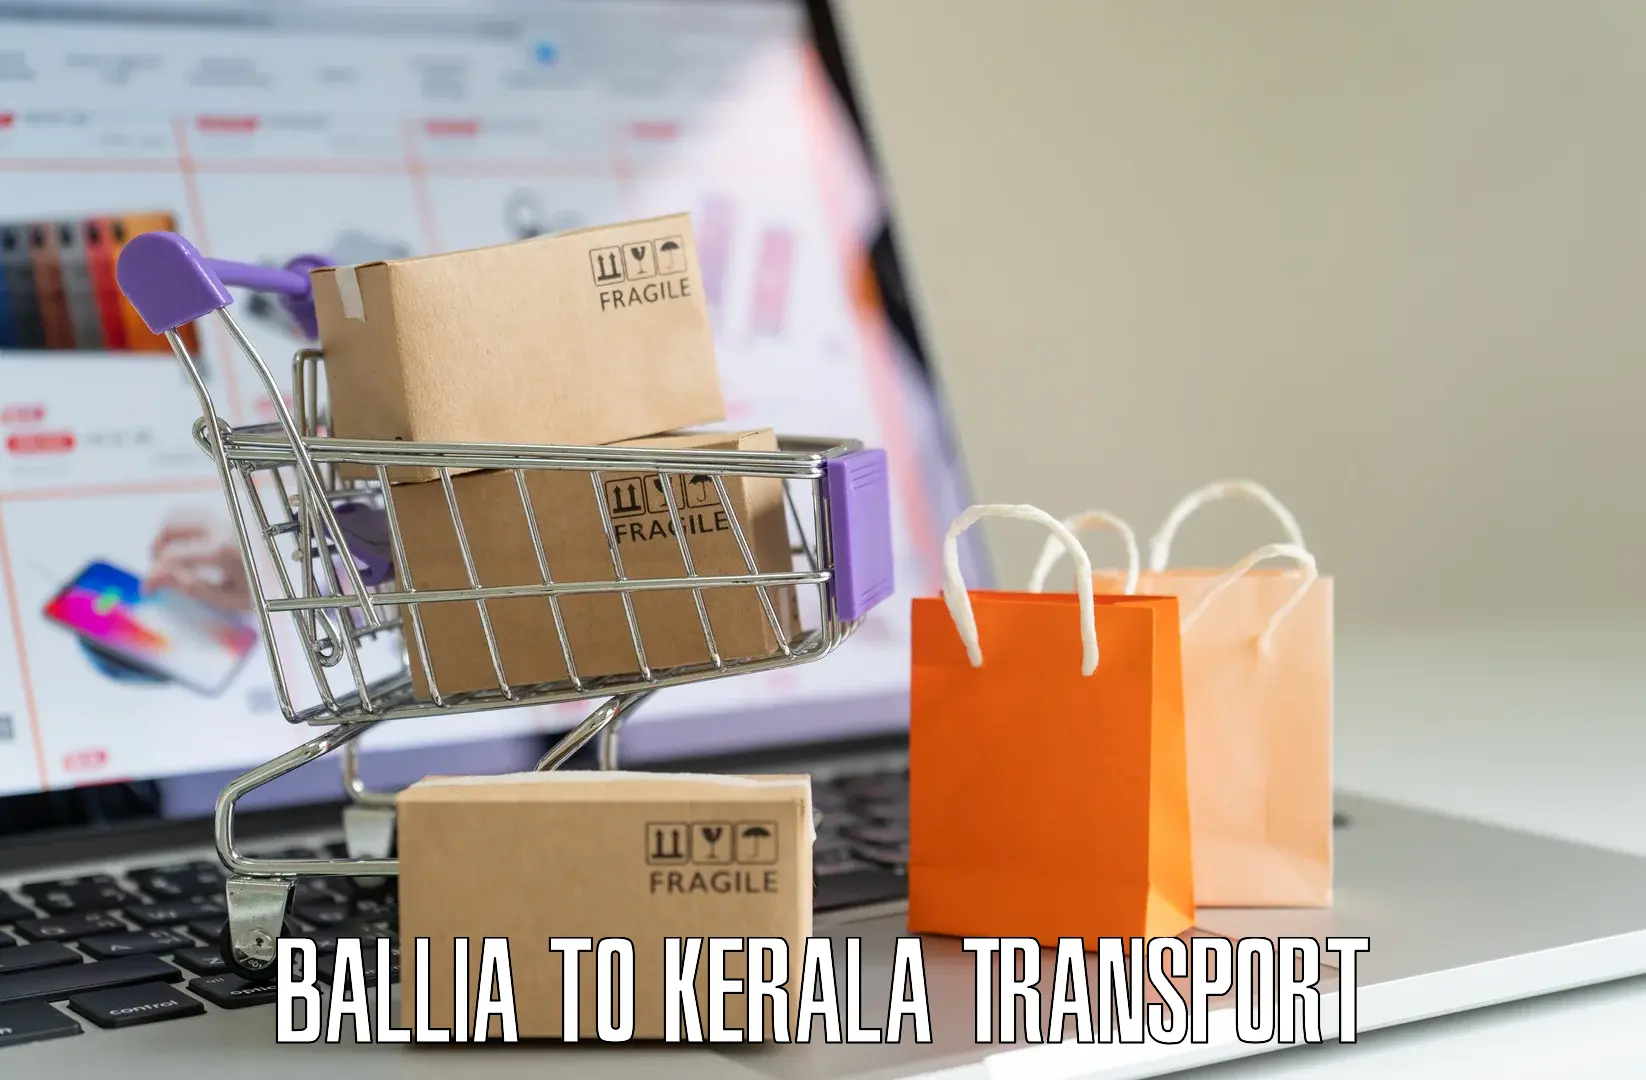 Delivery service Ballia to Alappuzha